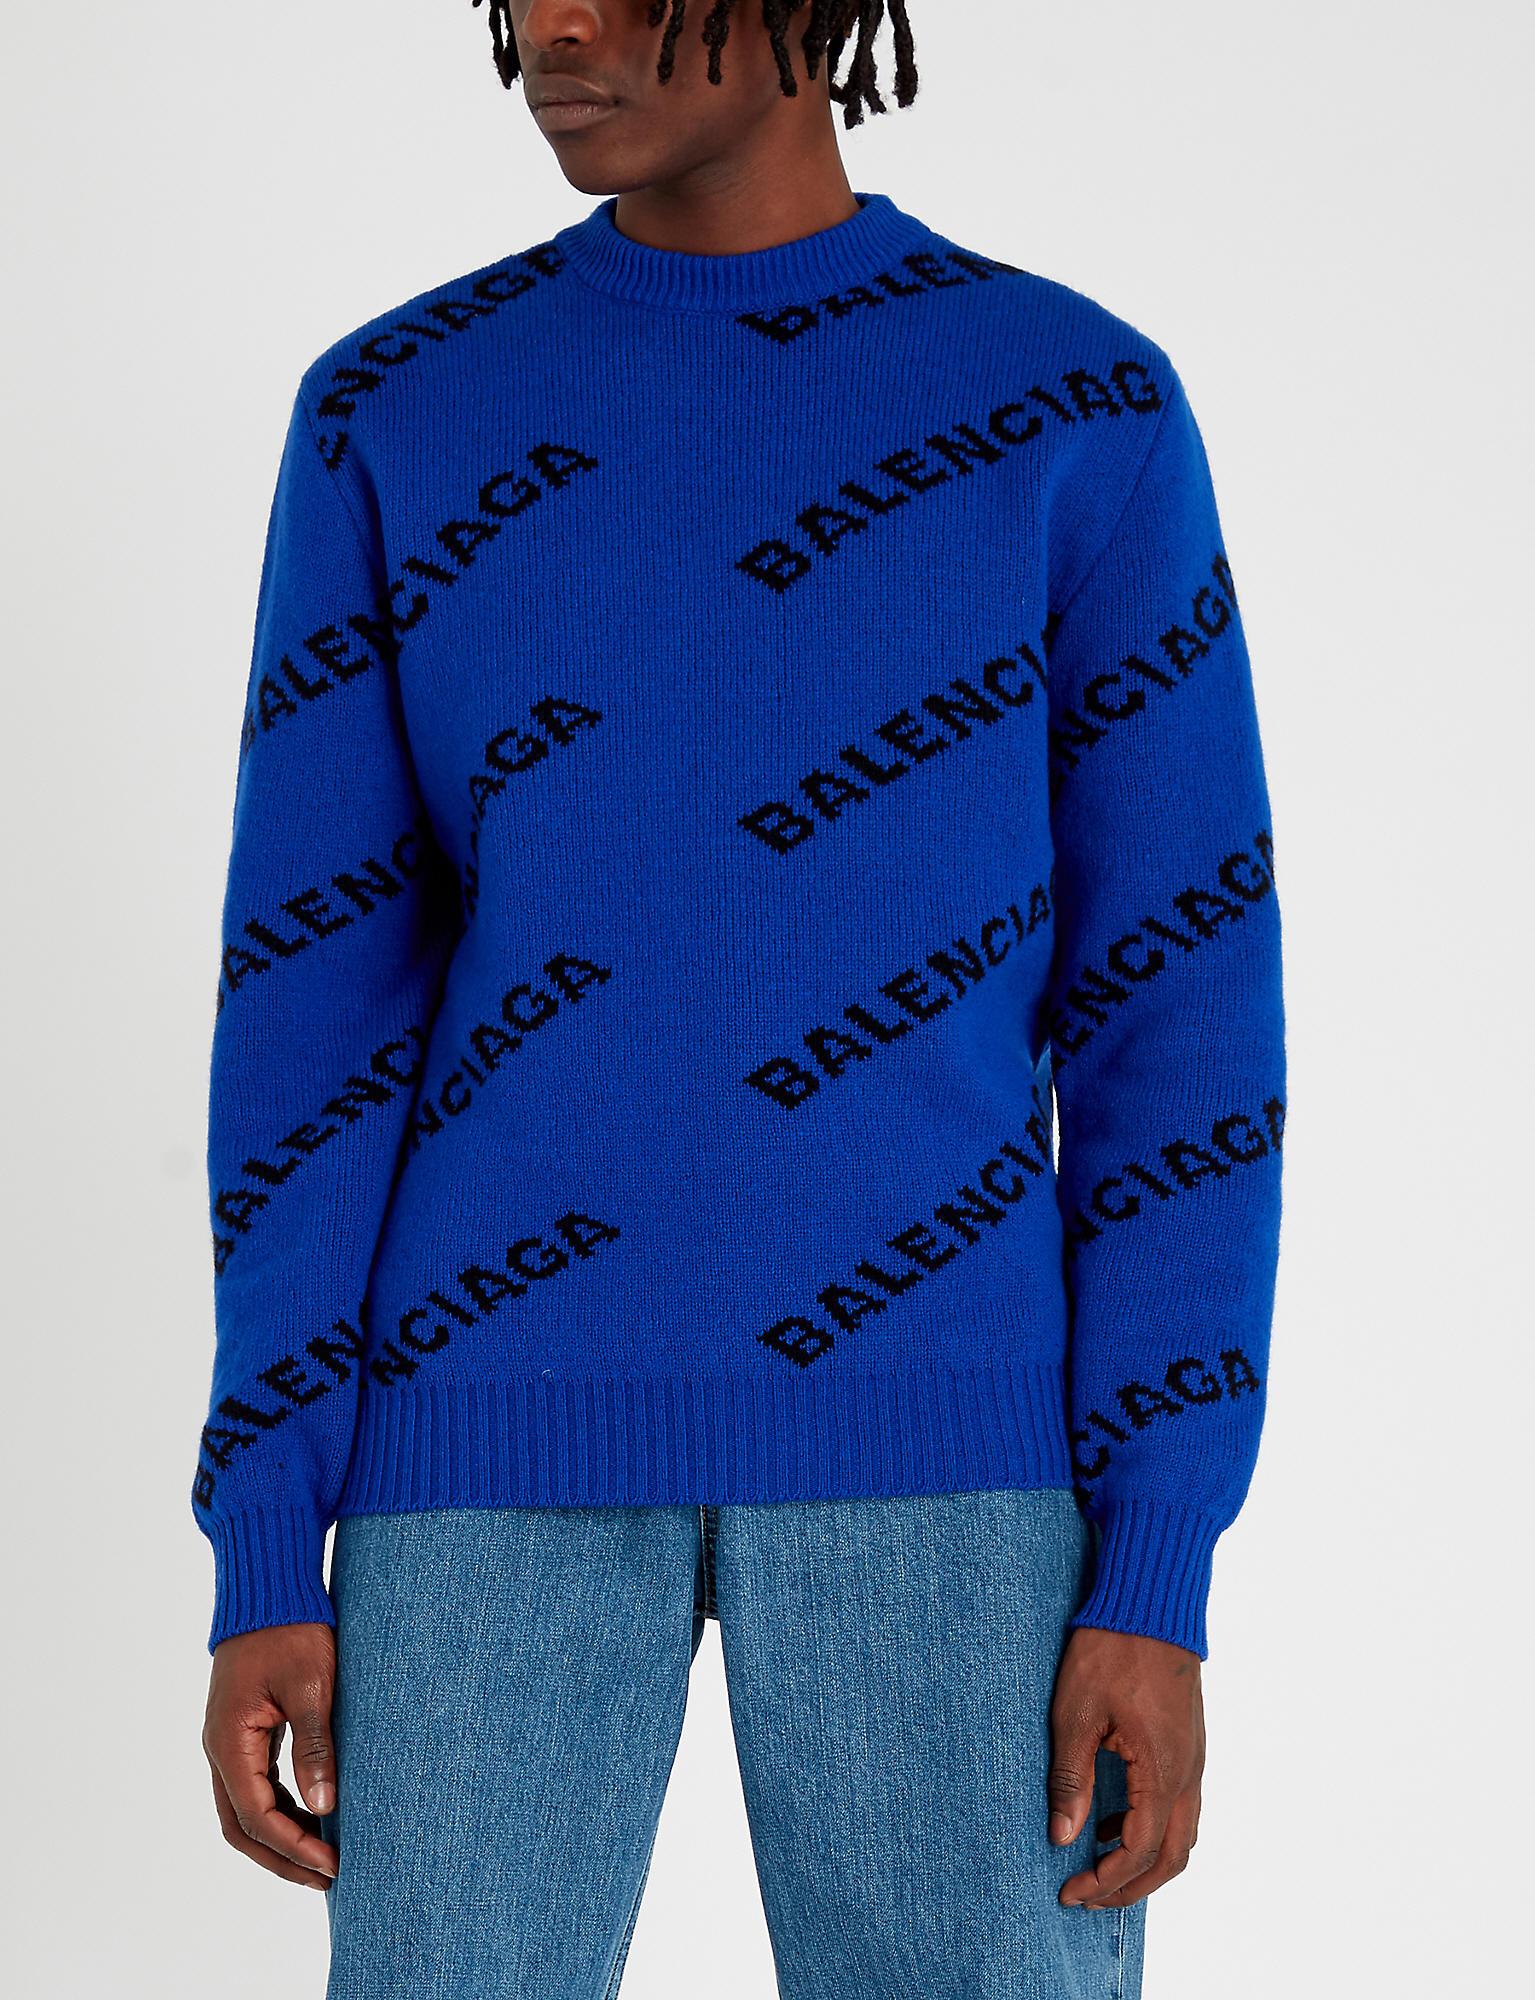 Balenciaga Logo Wool Sweater in Electric Blue/Black for Men - Lyst